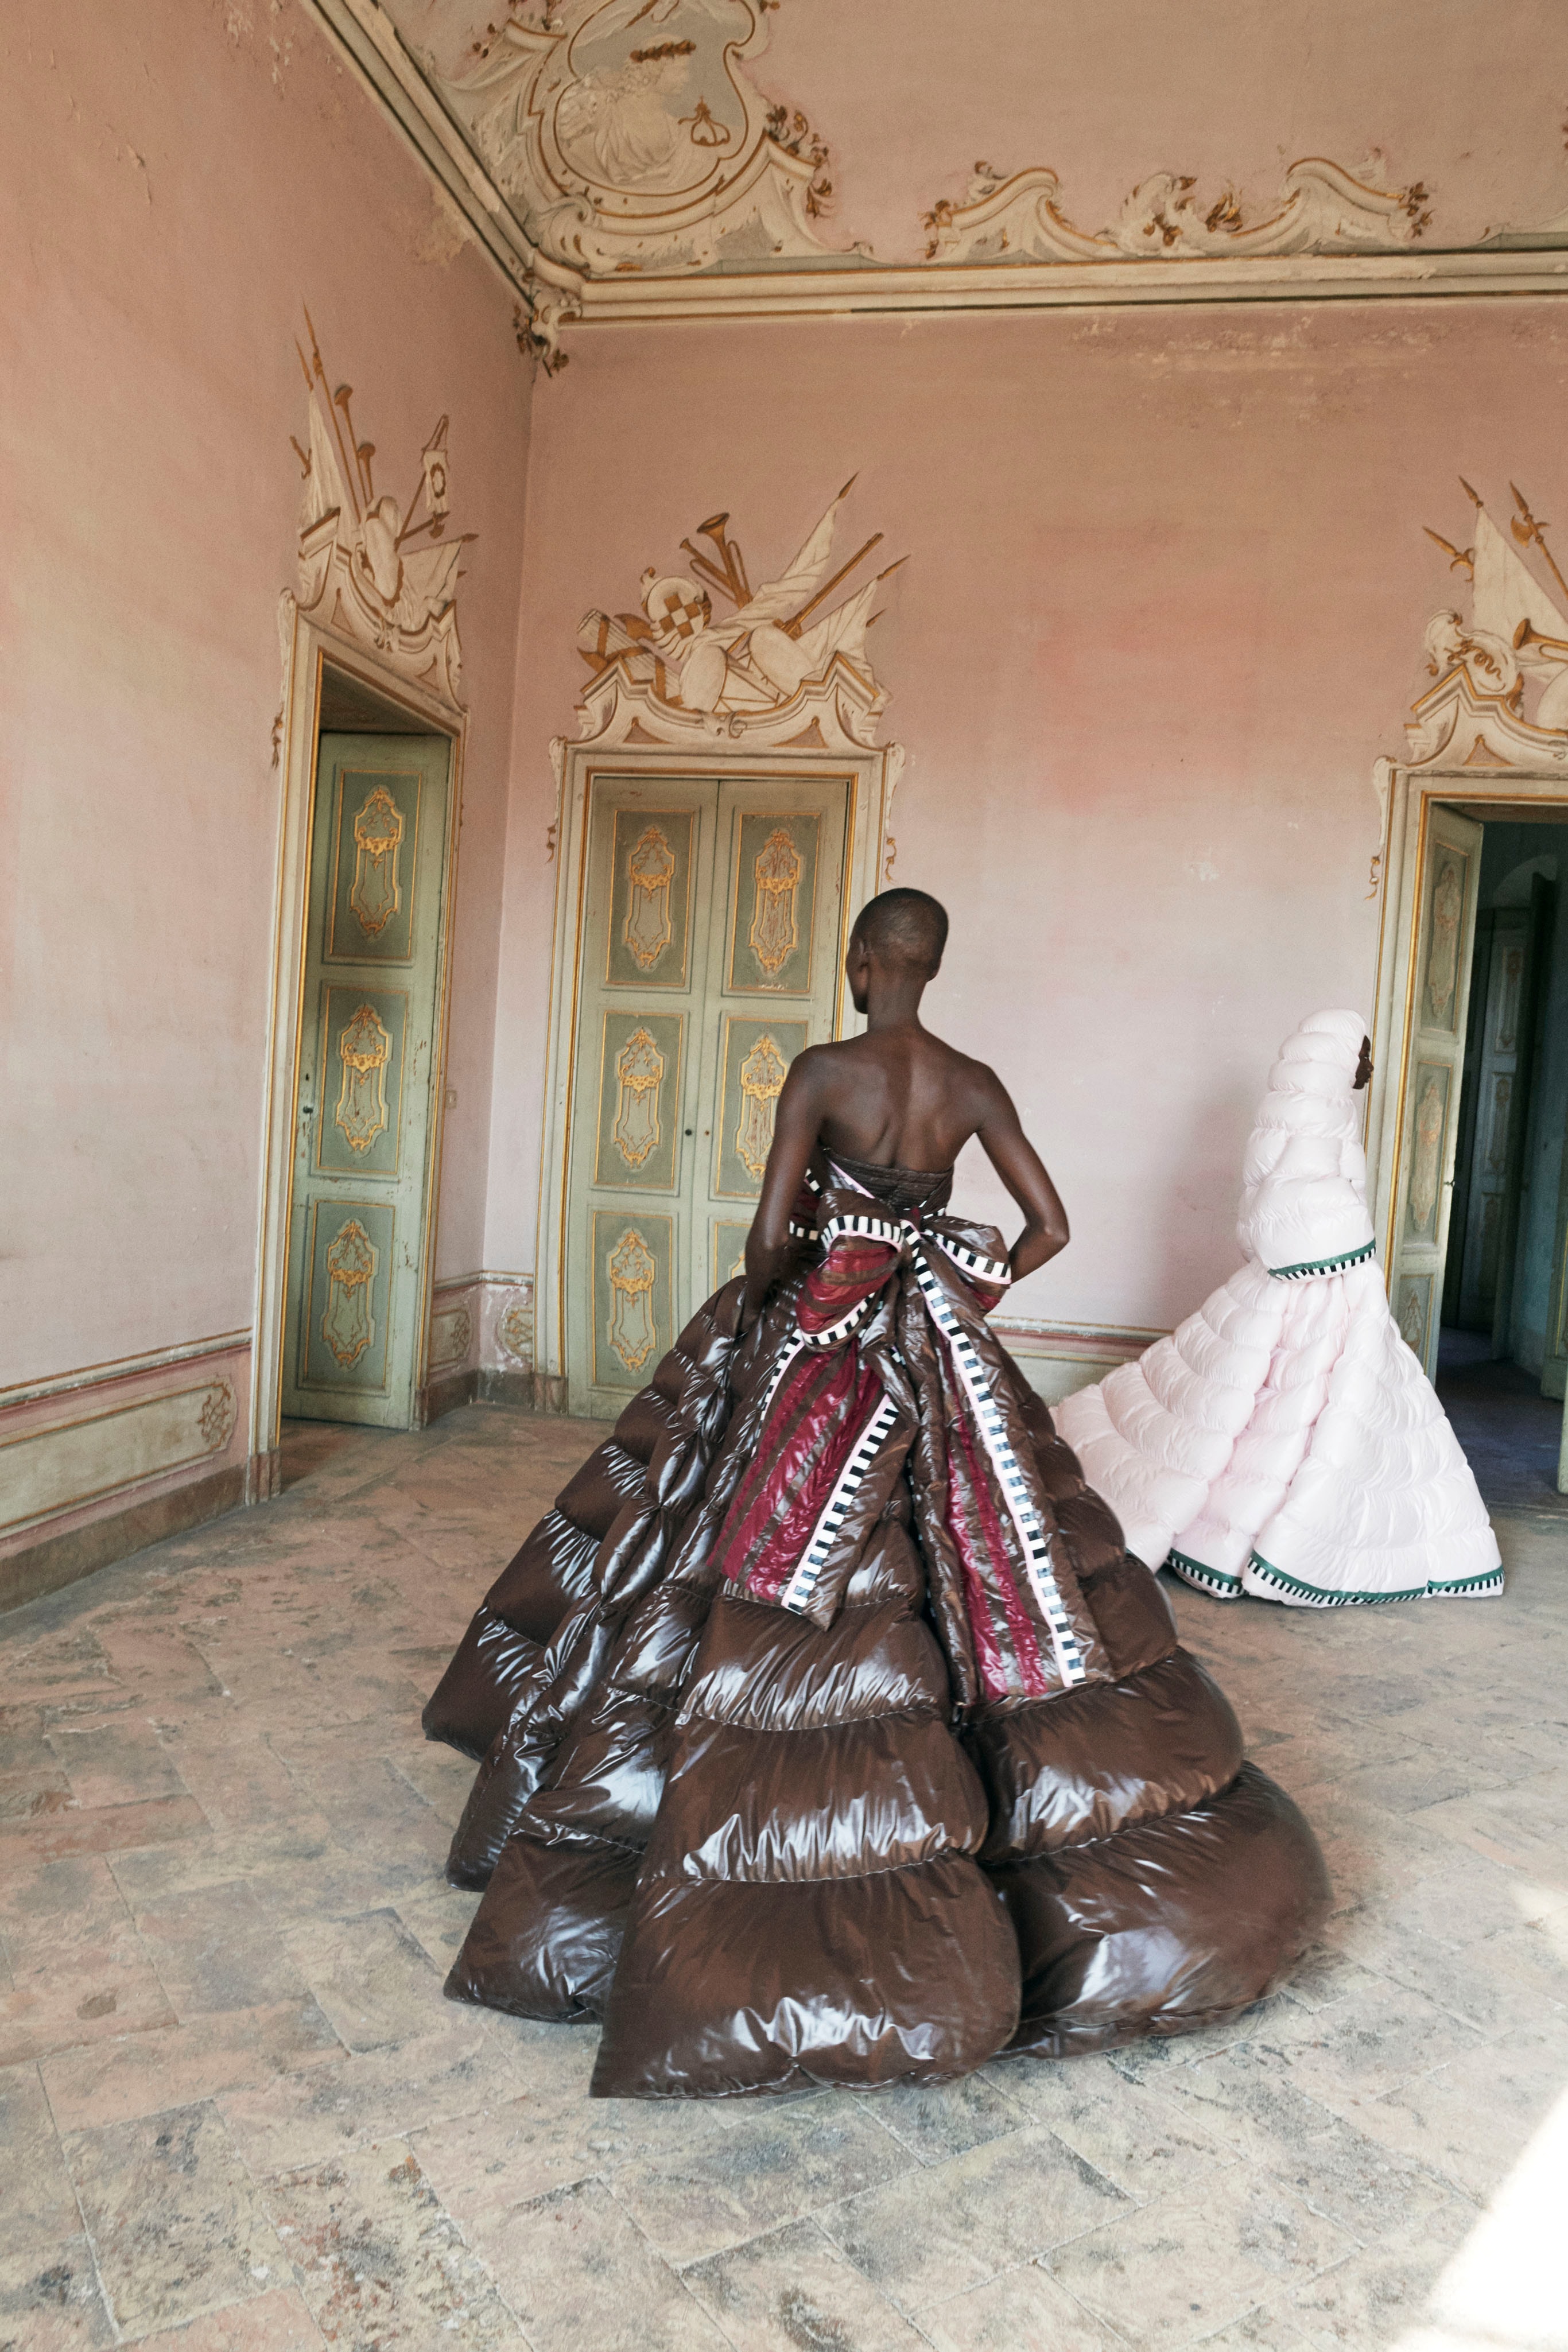 moncler genius series 1 pierpaolo piccioli dresses outerwear nylon puffer liya kebede tour milan fashion week ethiopia african valentino